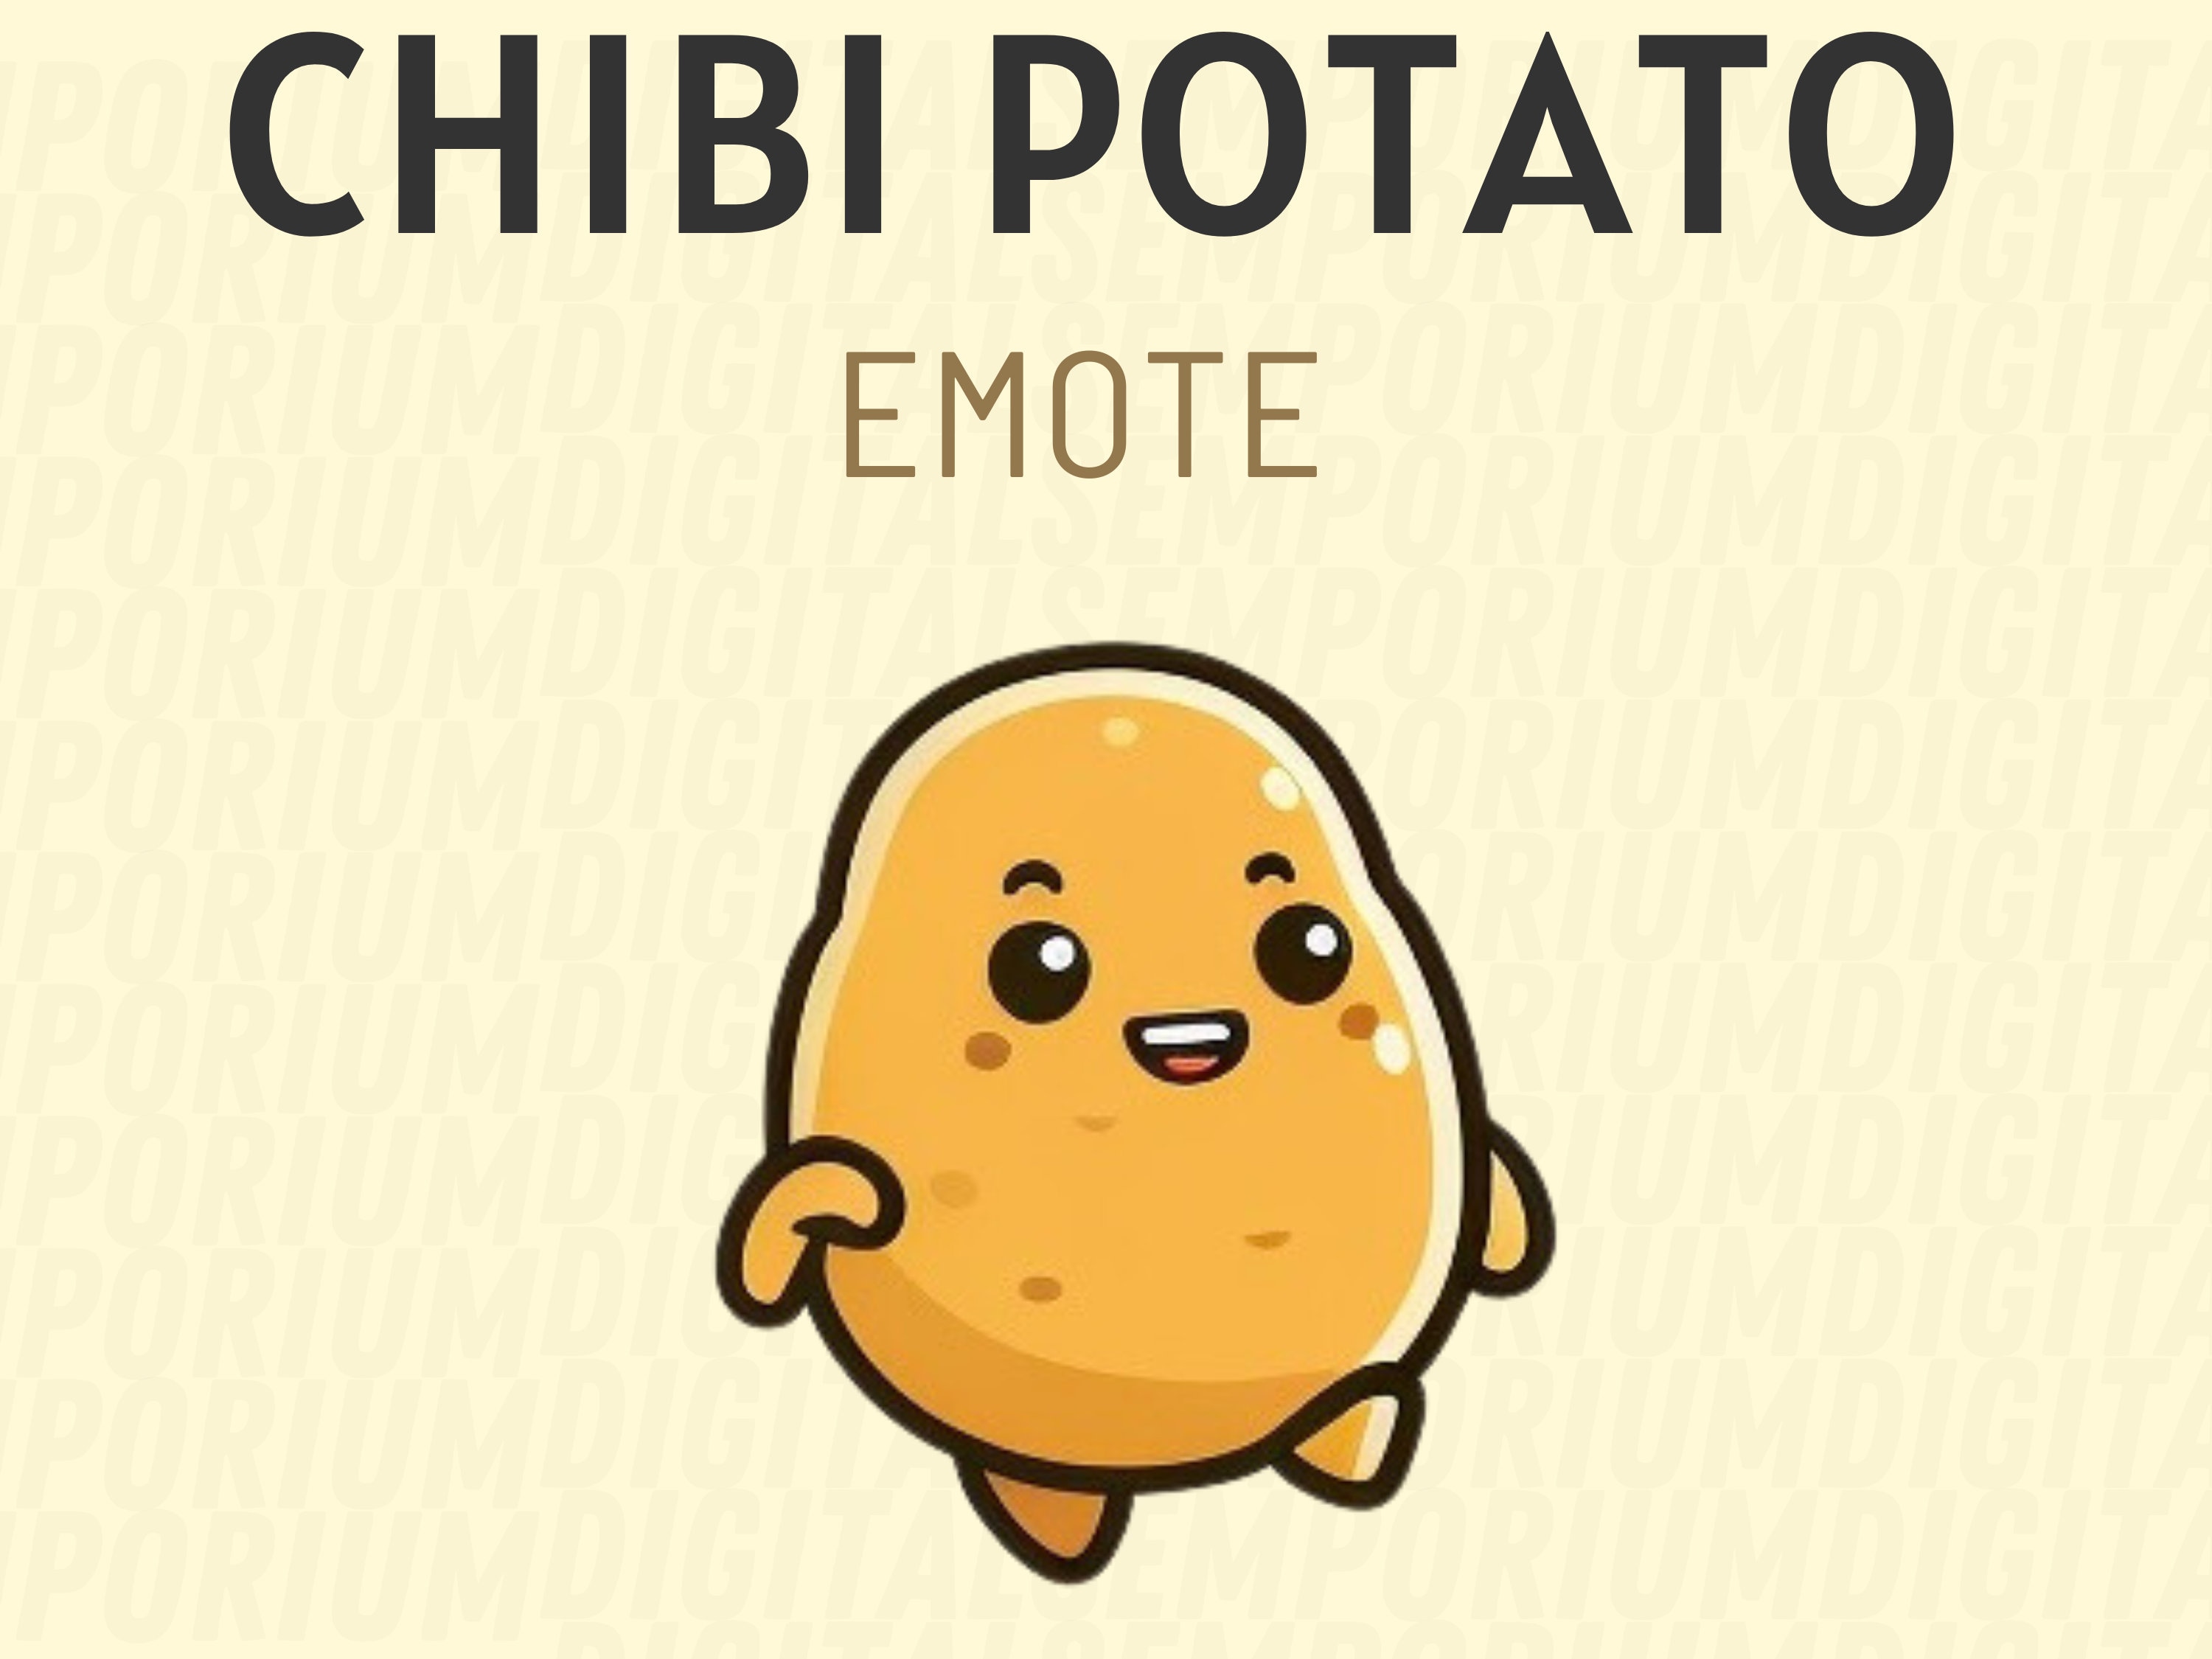 180 Best Cute potato ideas  cute potato, kawaii potato, potatoes